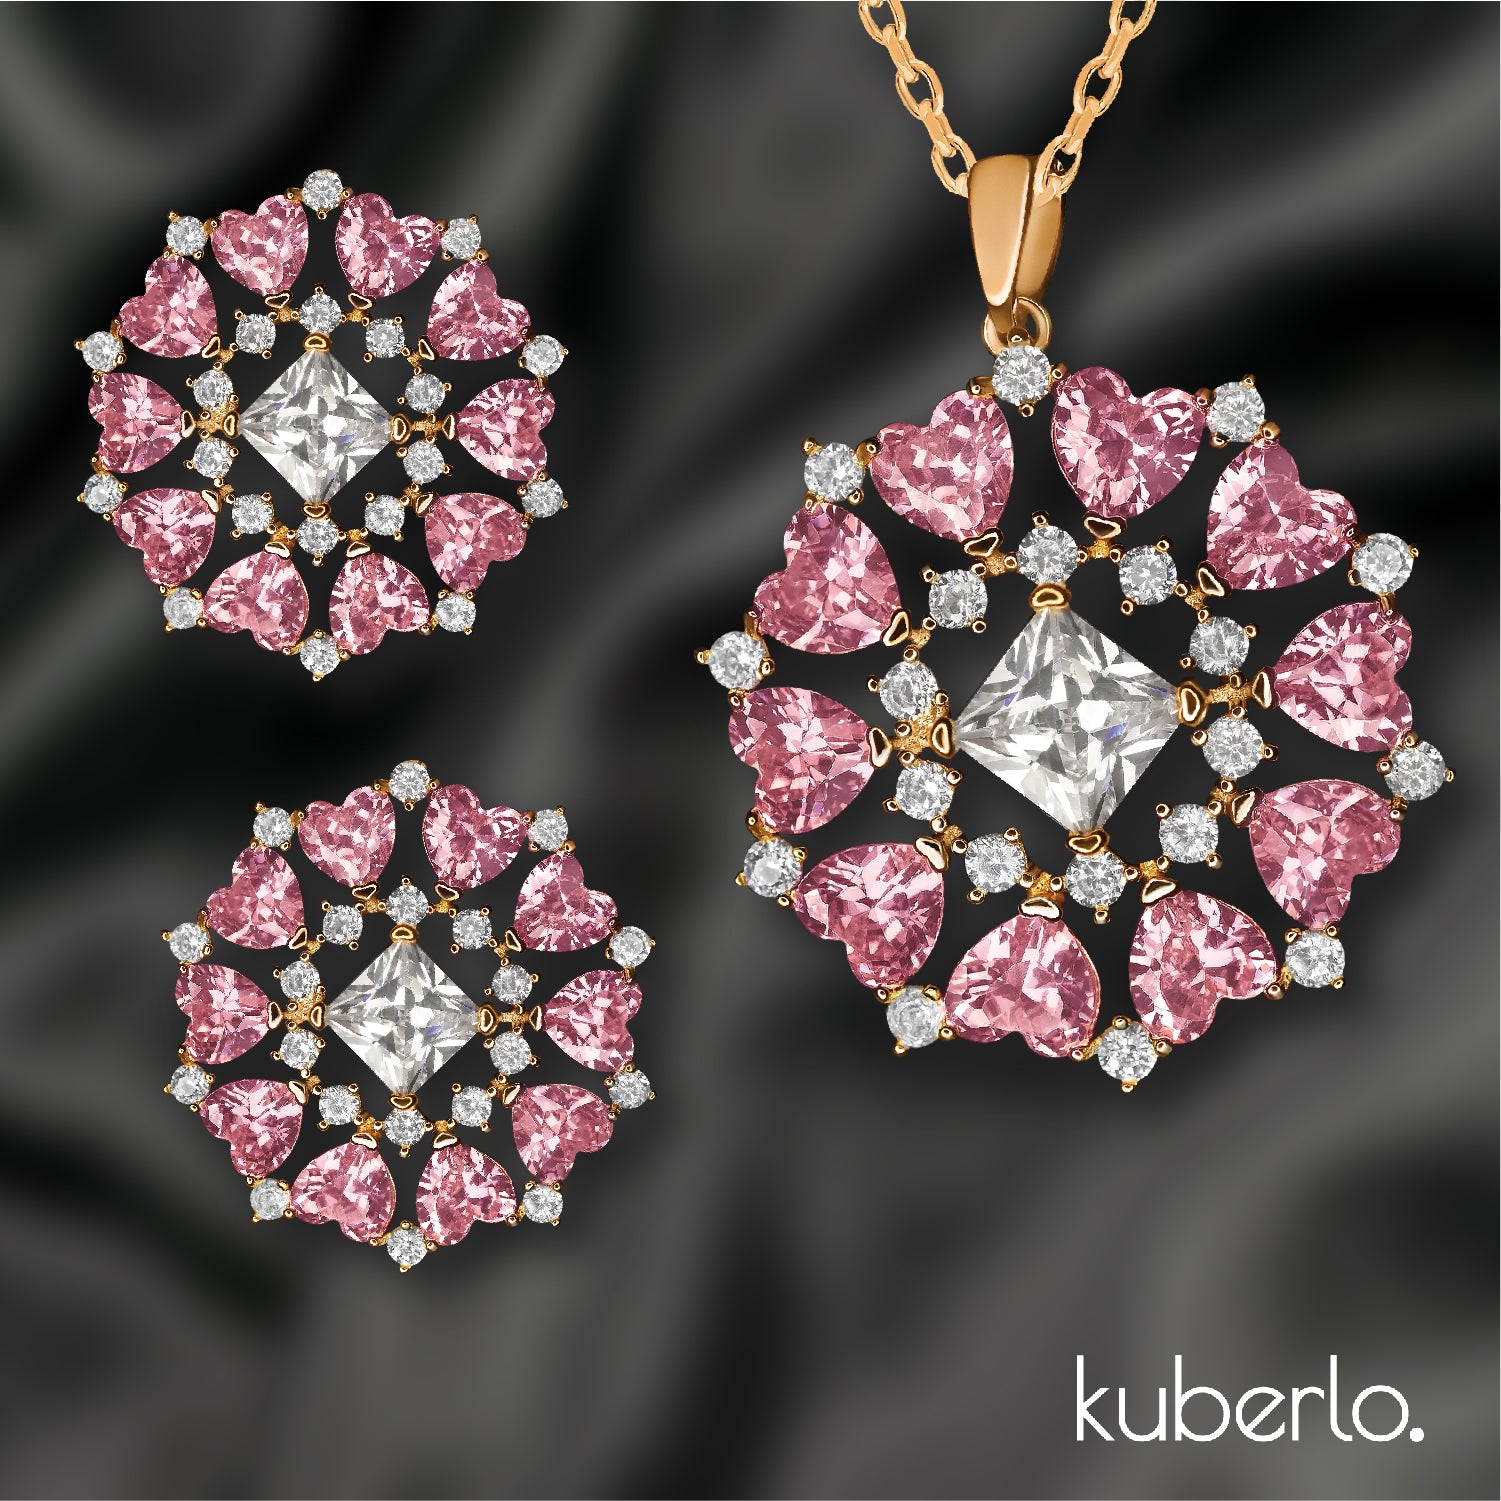 Meher Love Necklace Set - Kuberlo - Best Gift for - Imitation Jewellery - Designer Jewellery - one gram gold - fashion jewellery